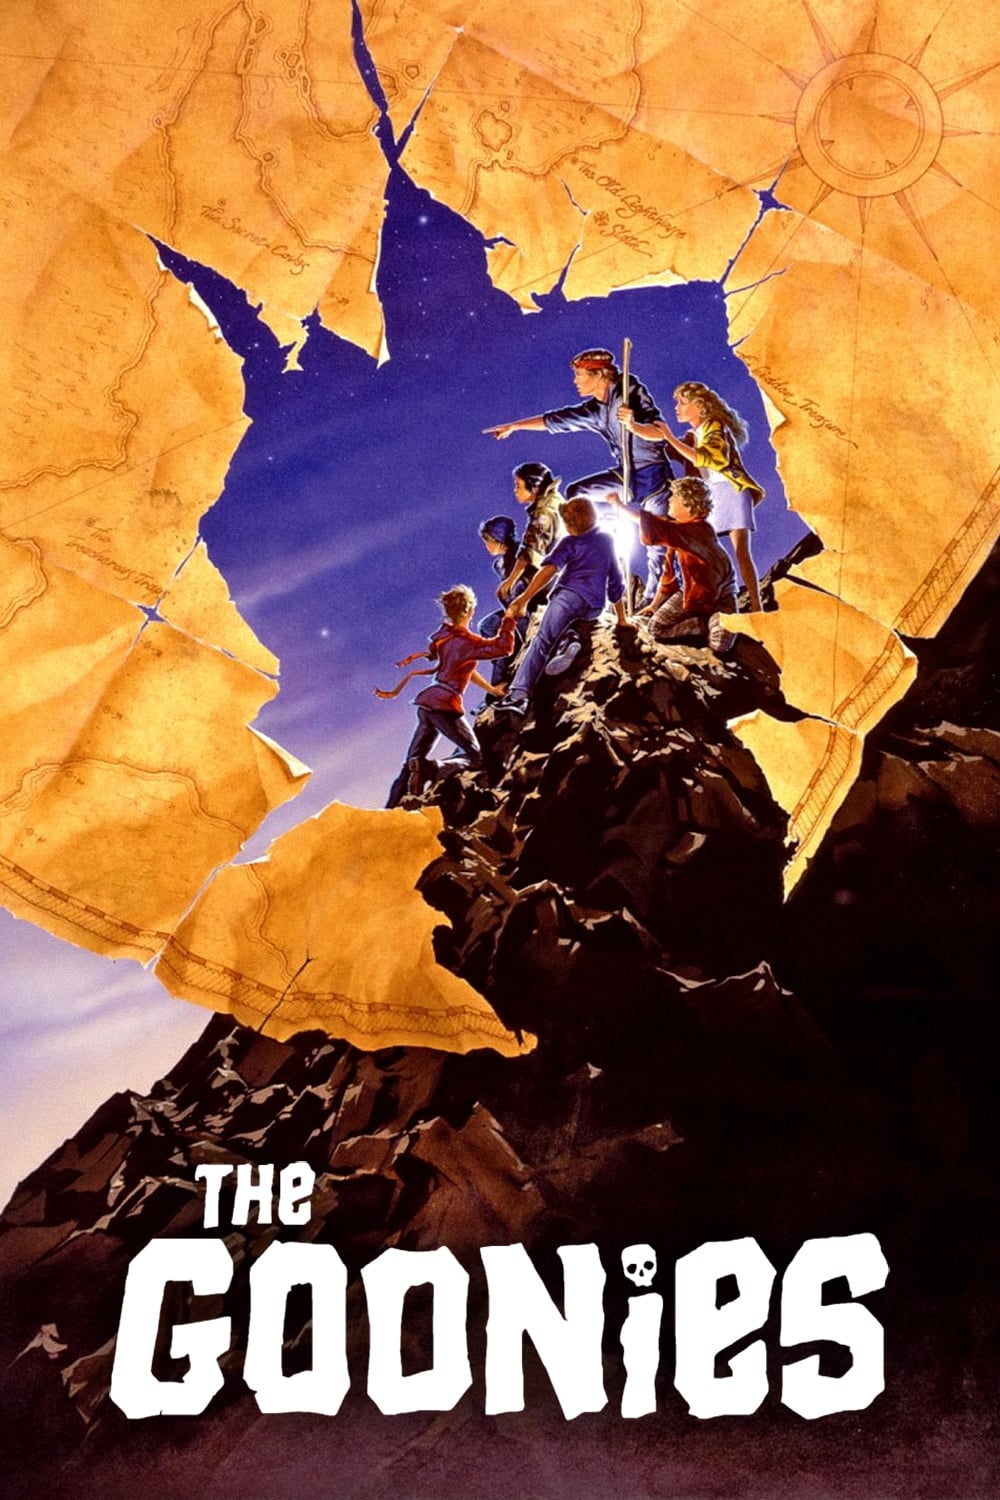 The Goonies 1985 Posters — The Movie Database Tmdb